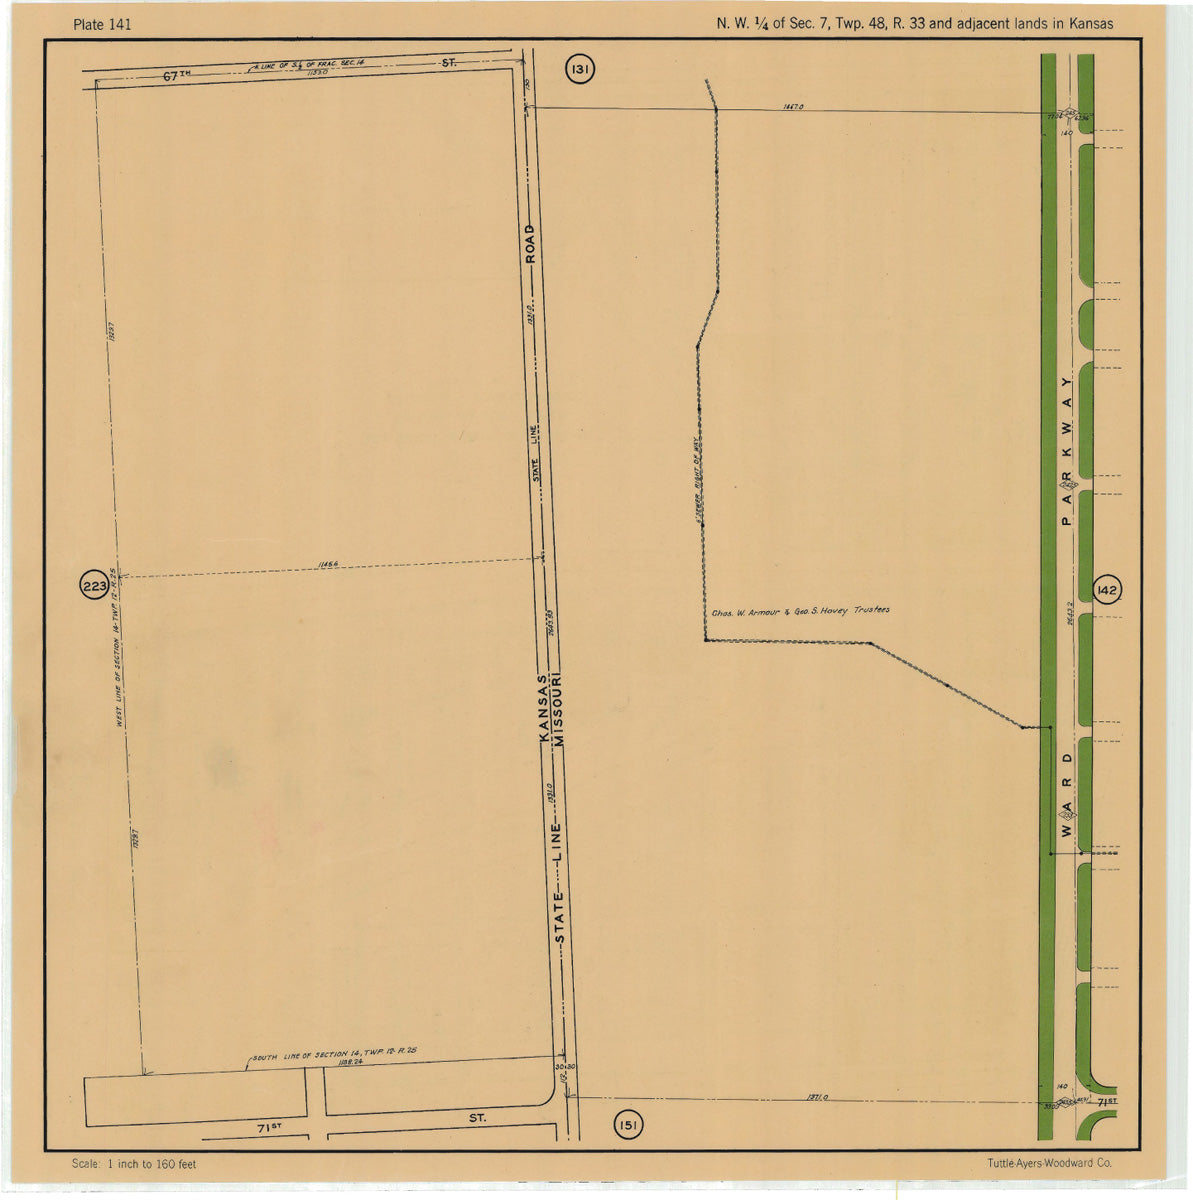 Kansas City 1925 Neighborhood Map - Plate #141 67th-71st State Line-Ward Pkwy